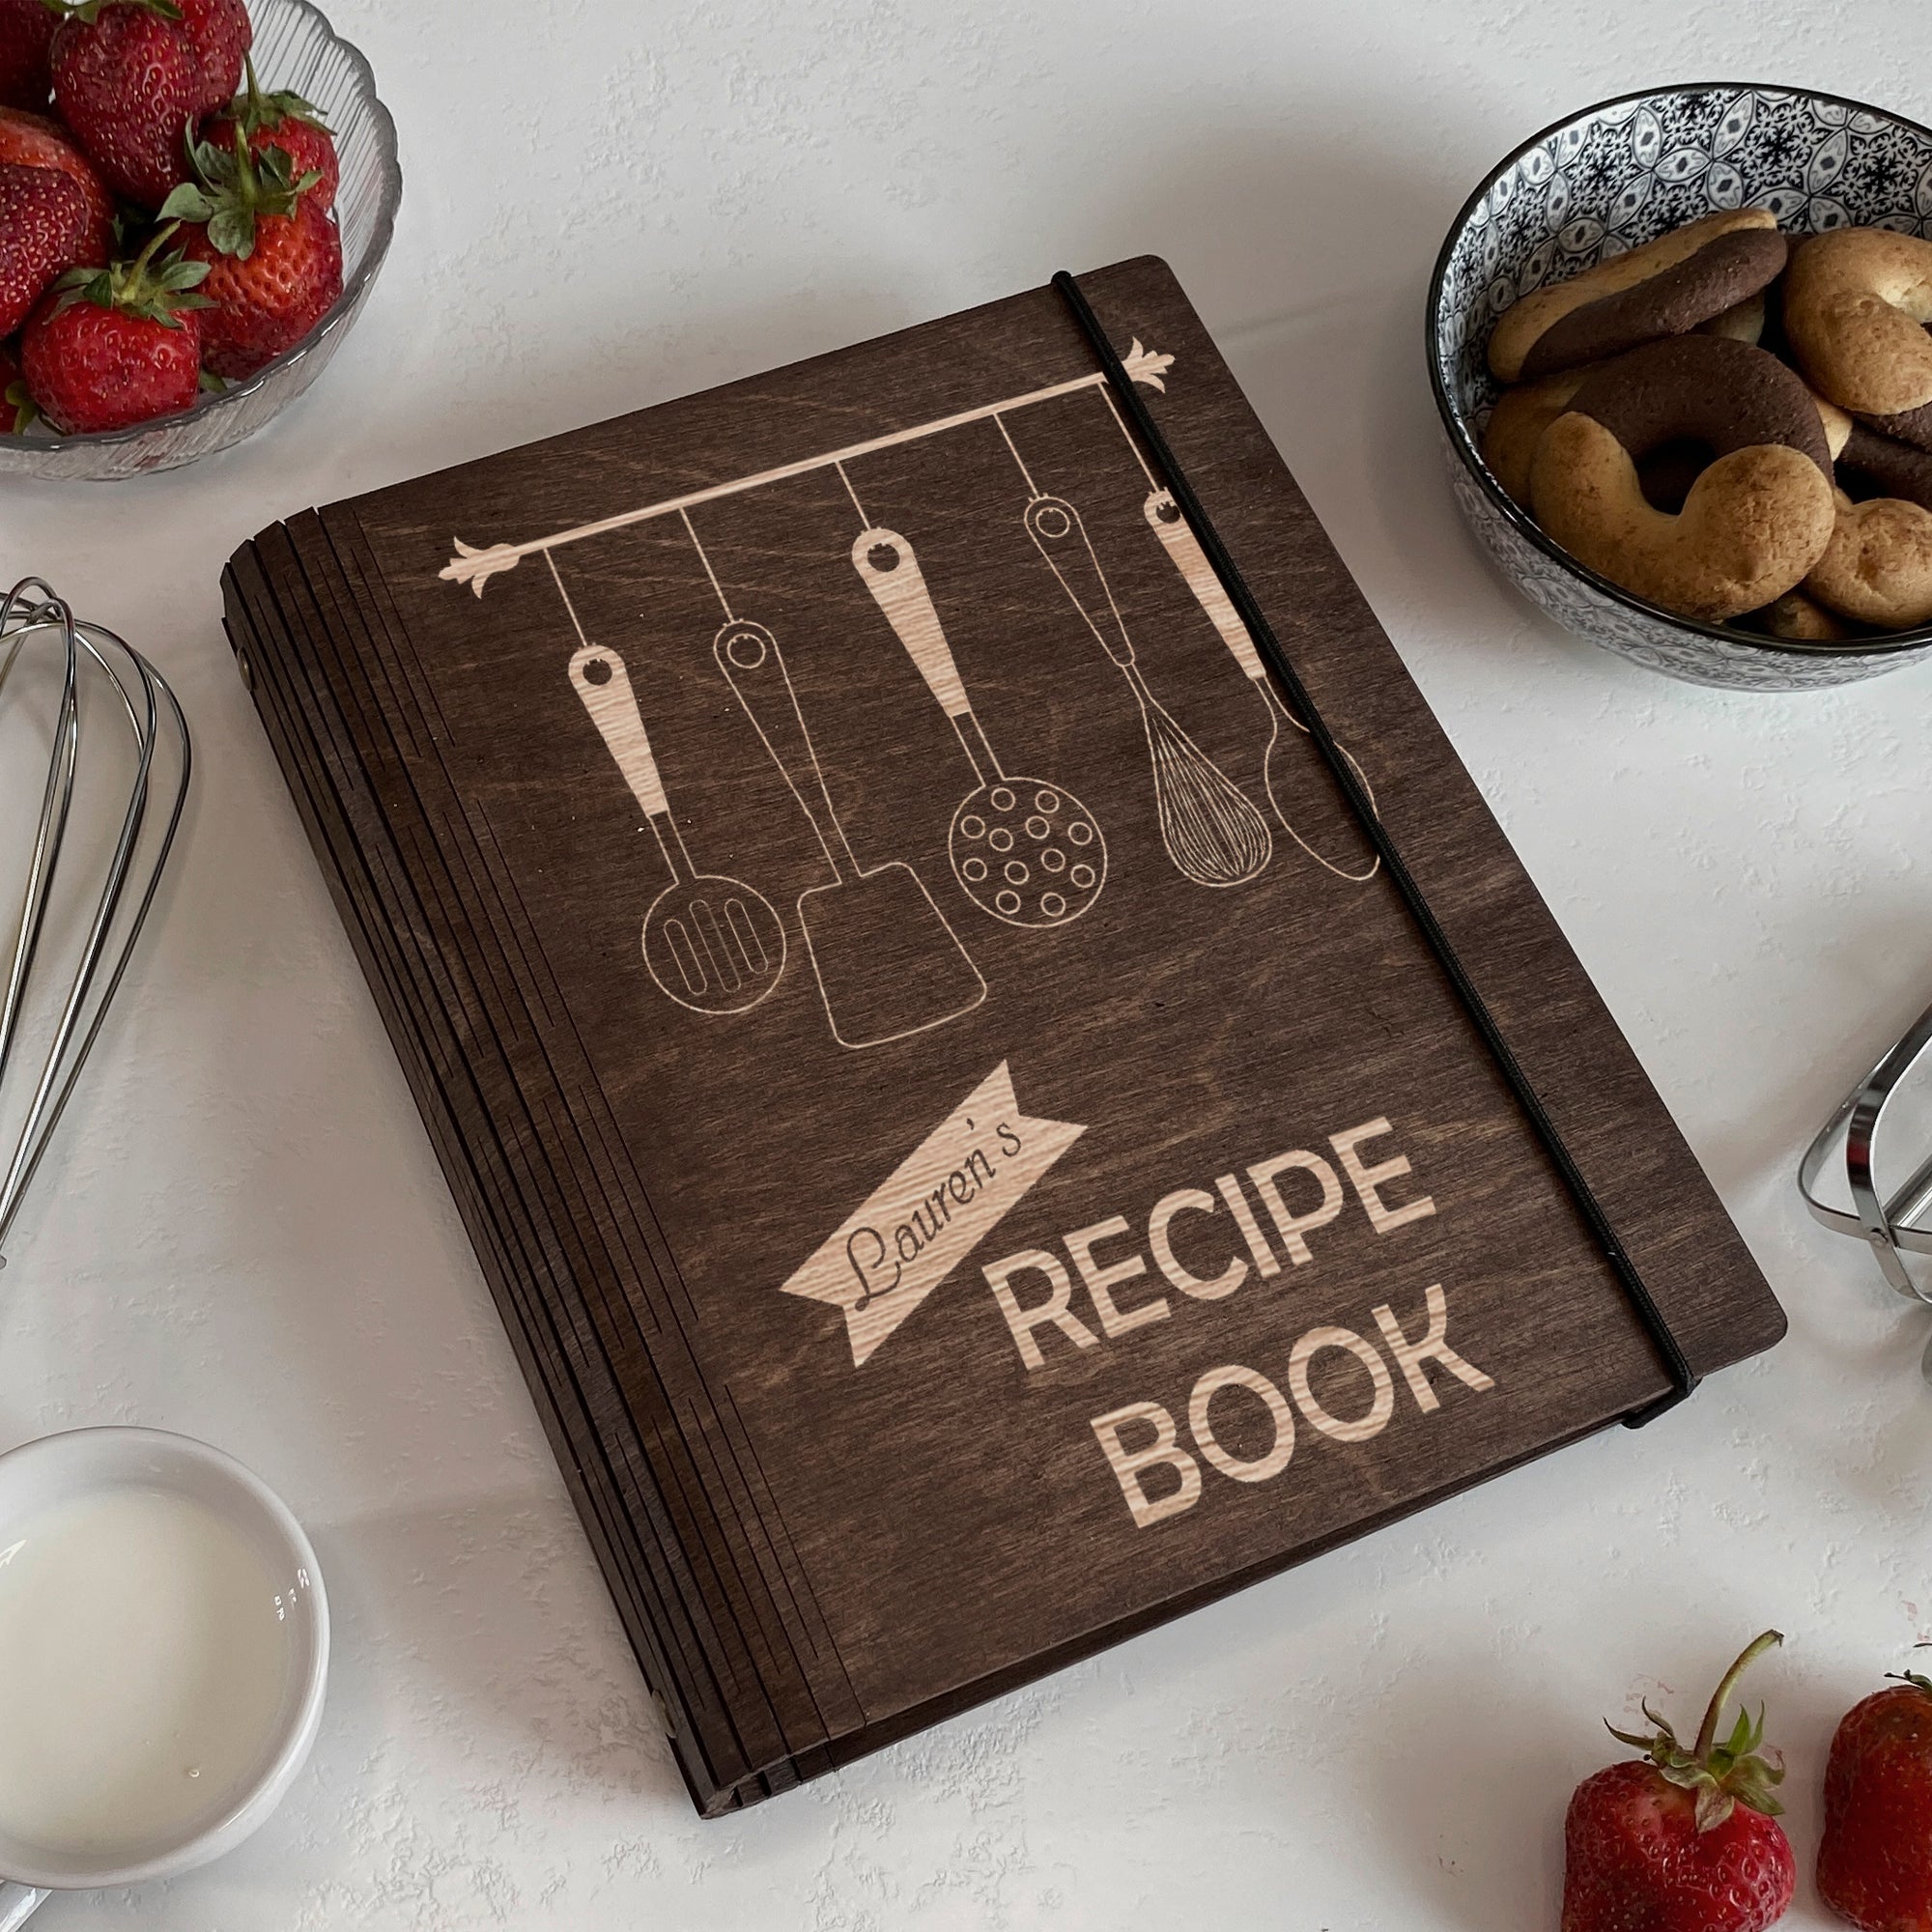 Chef Cookbook